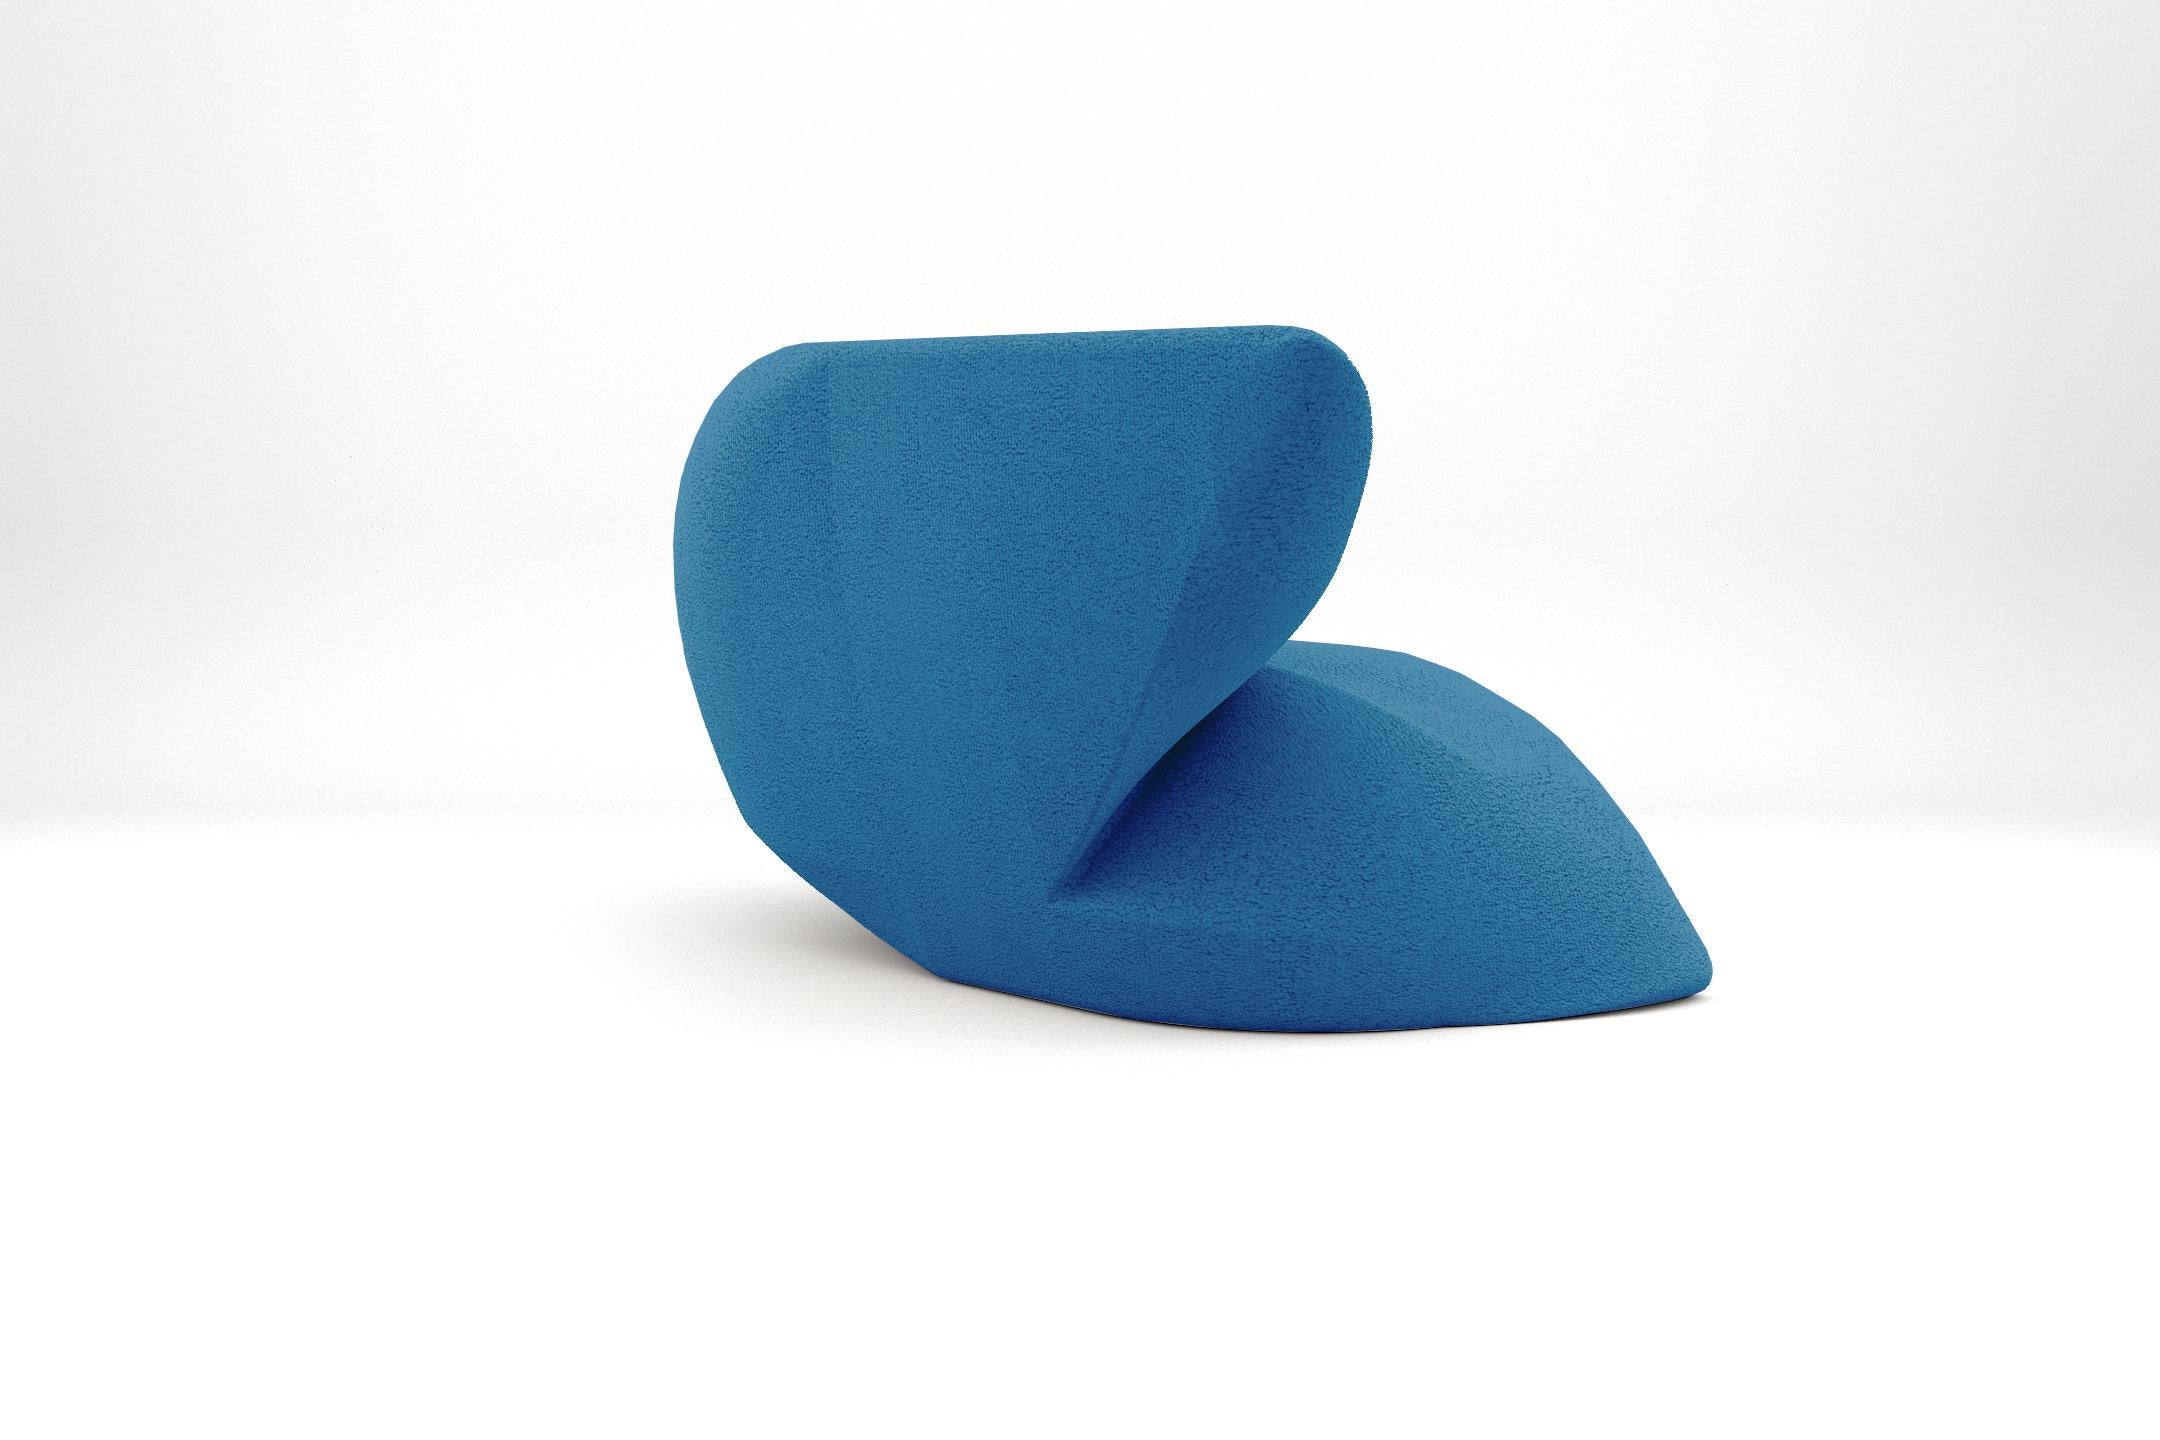 European Delta Armchair - Modern Classic Blue Upholstered Armchair For Sale